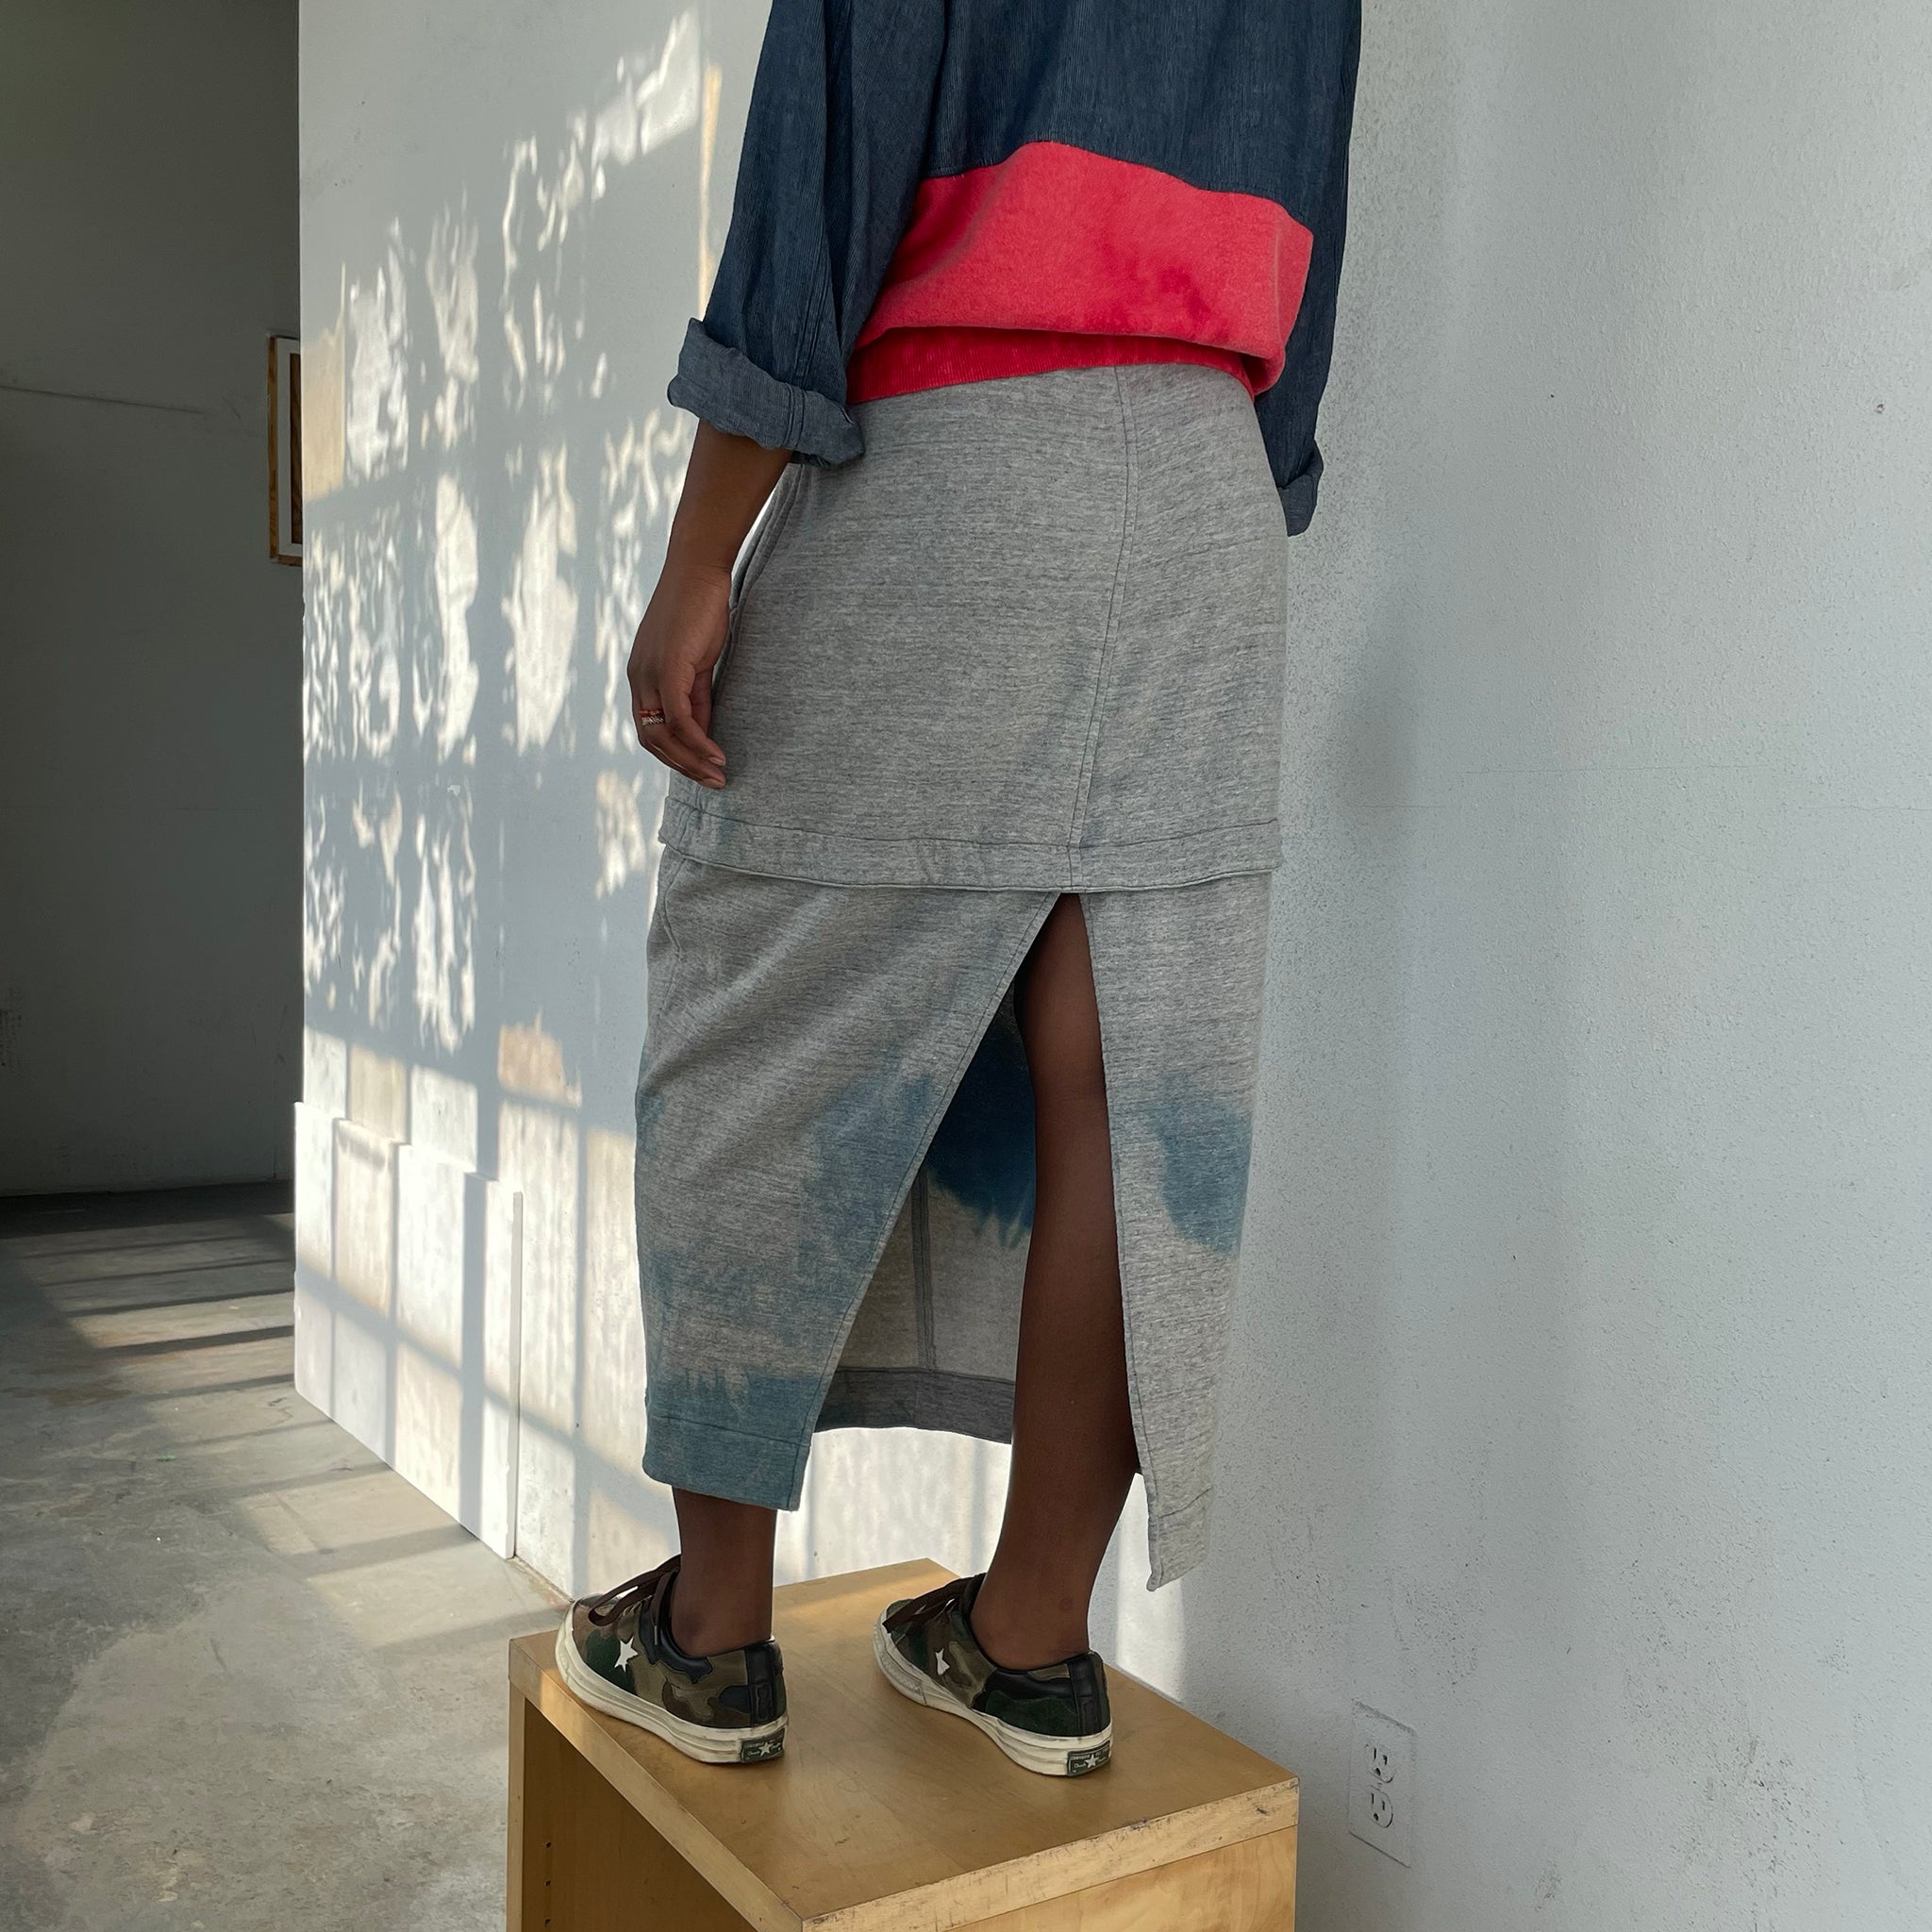 Indigo Dyed Regime Skirt